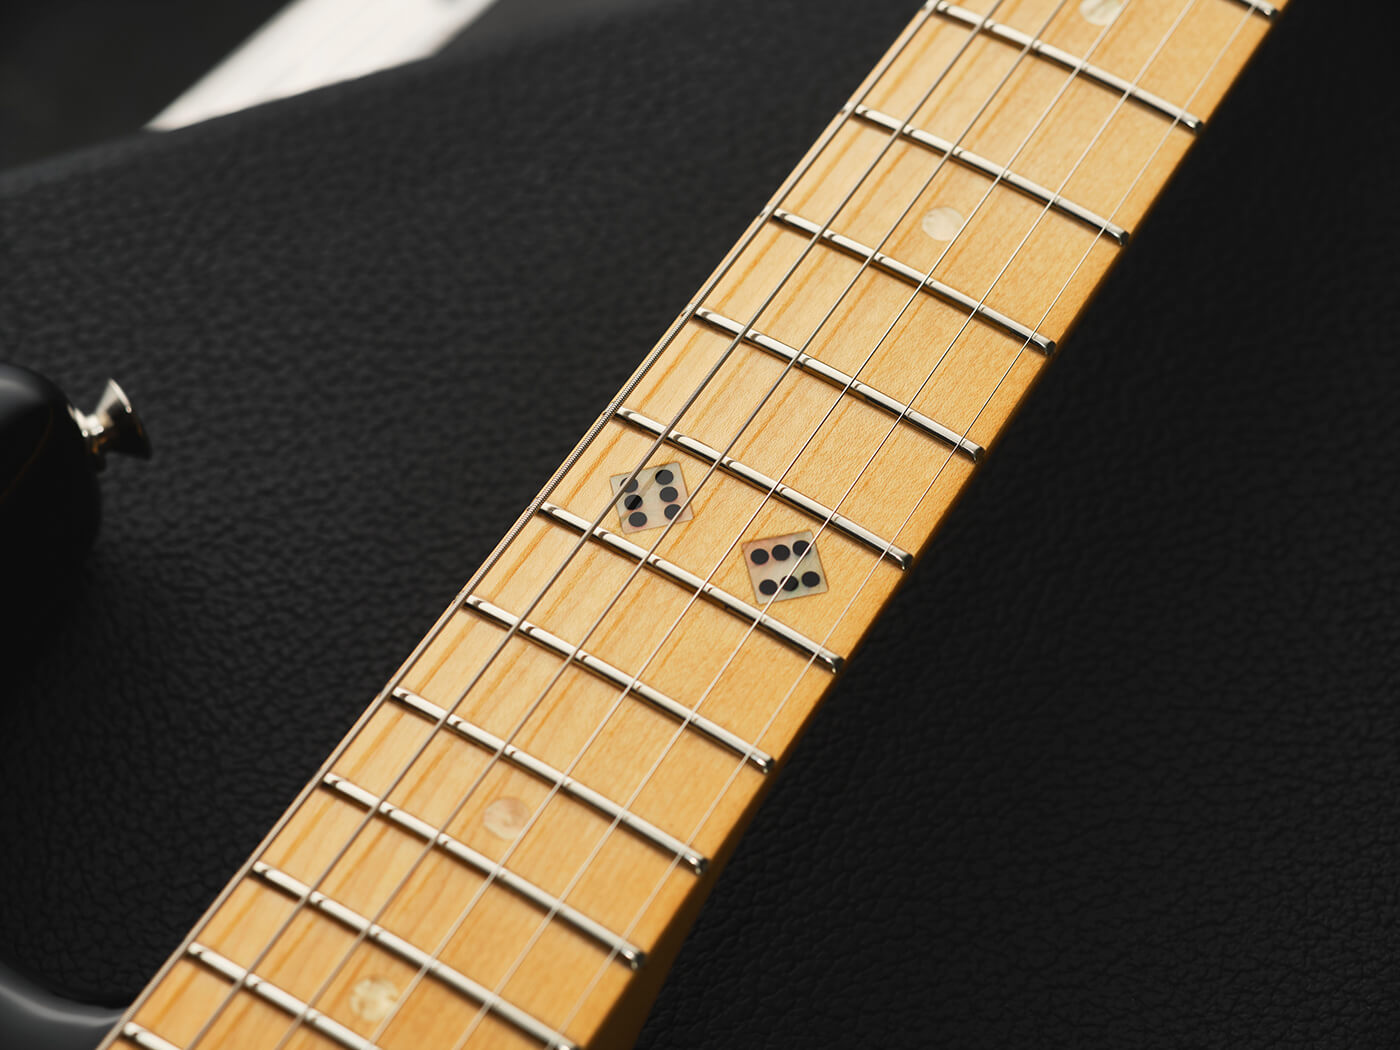 Fender Steve Lacy People Pleaser Stratocaster fretboard by Adam Gasson